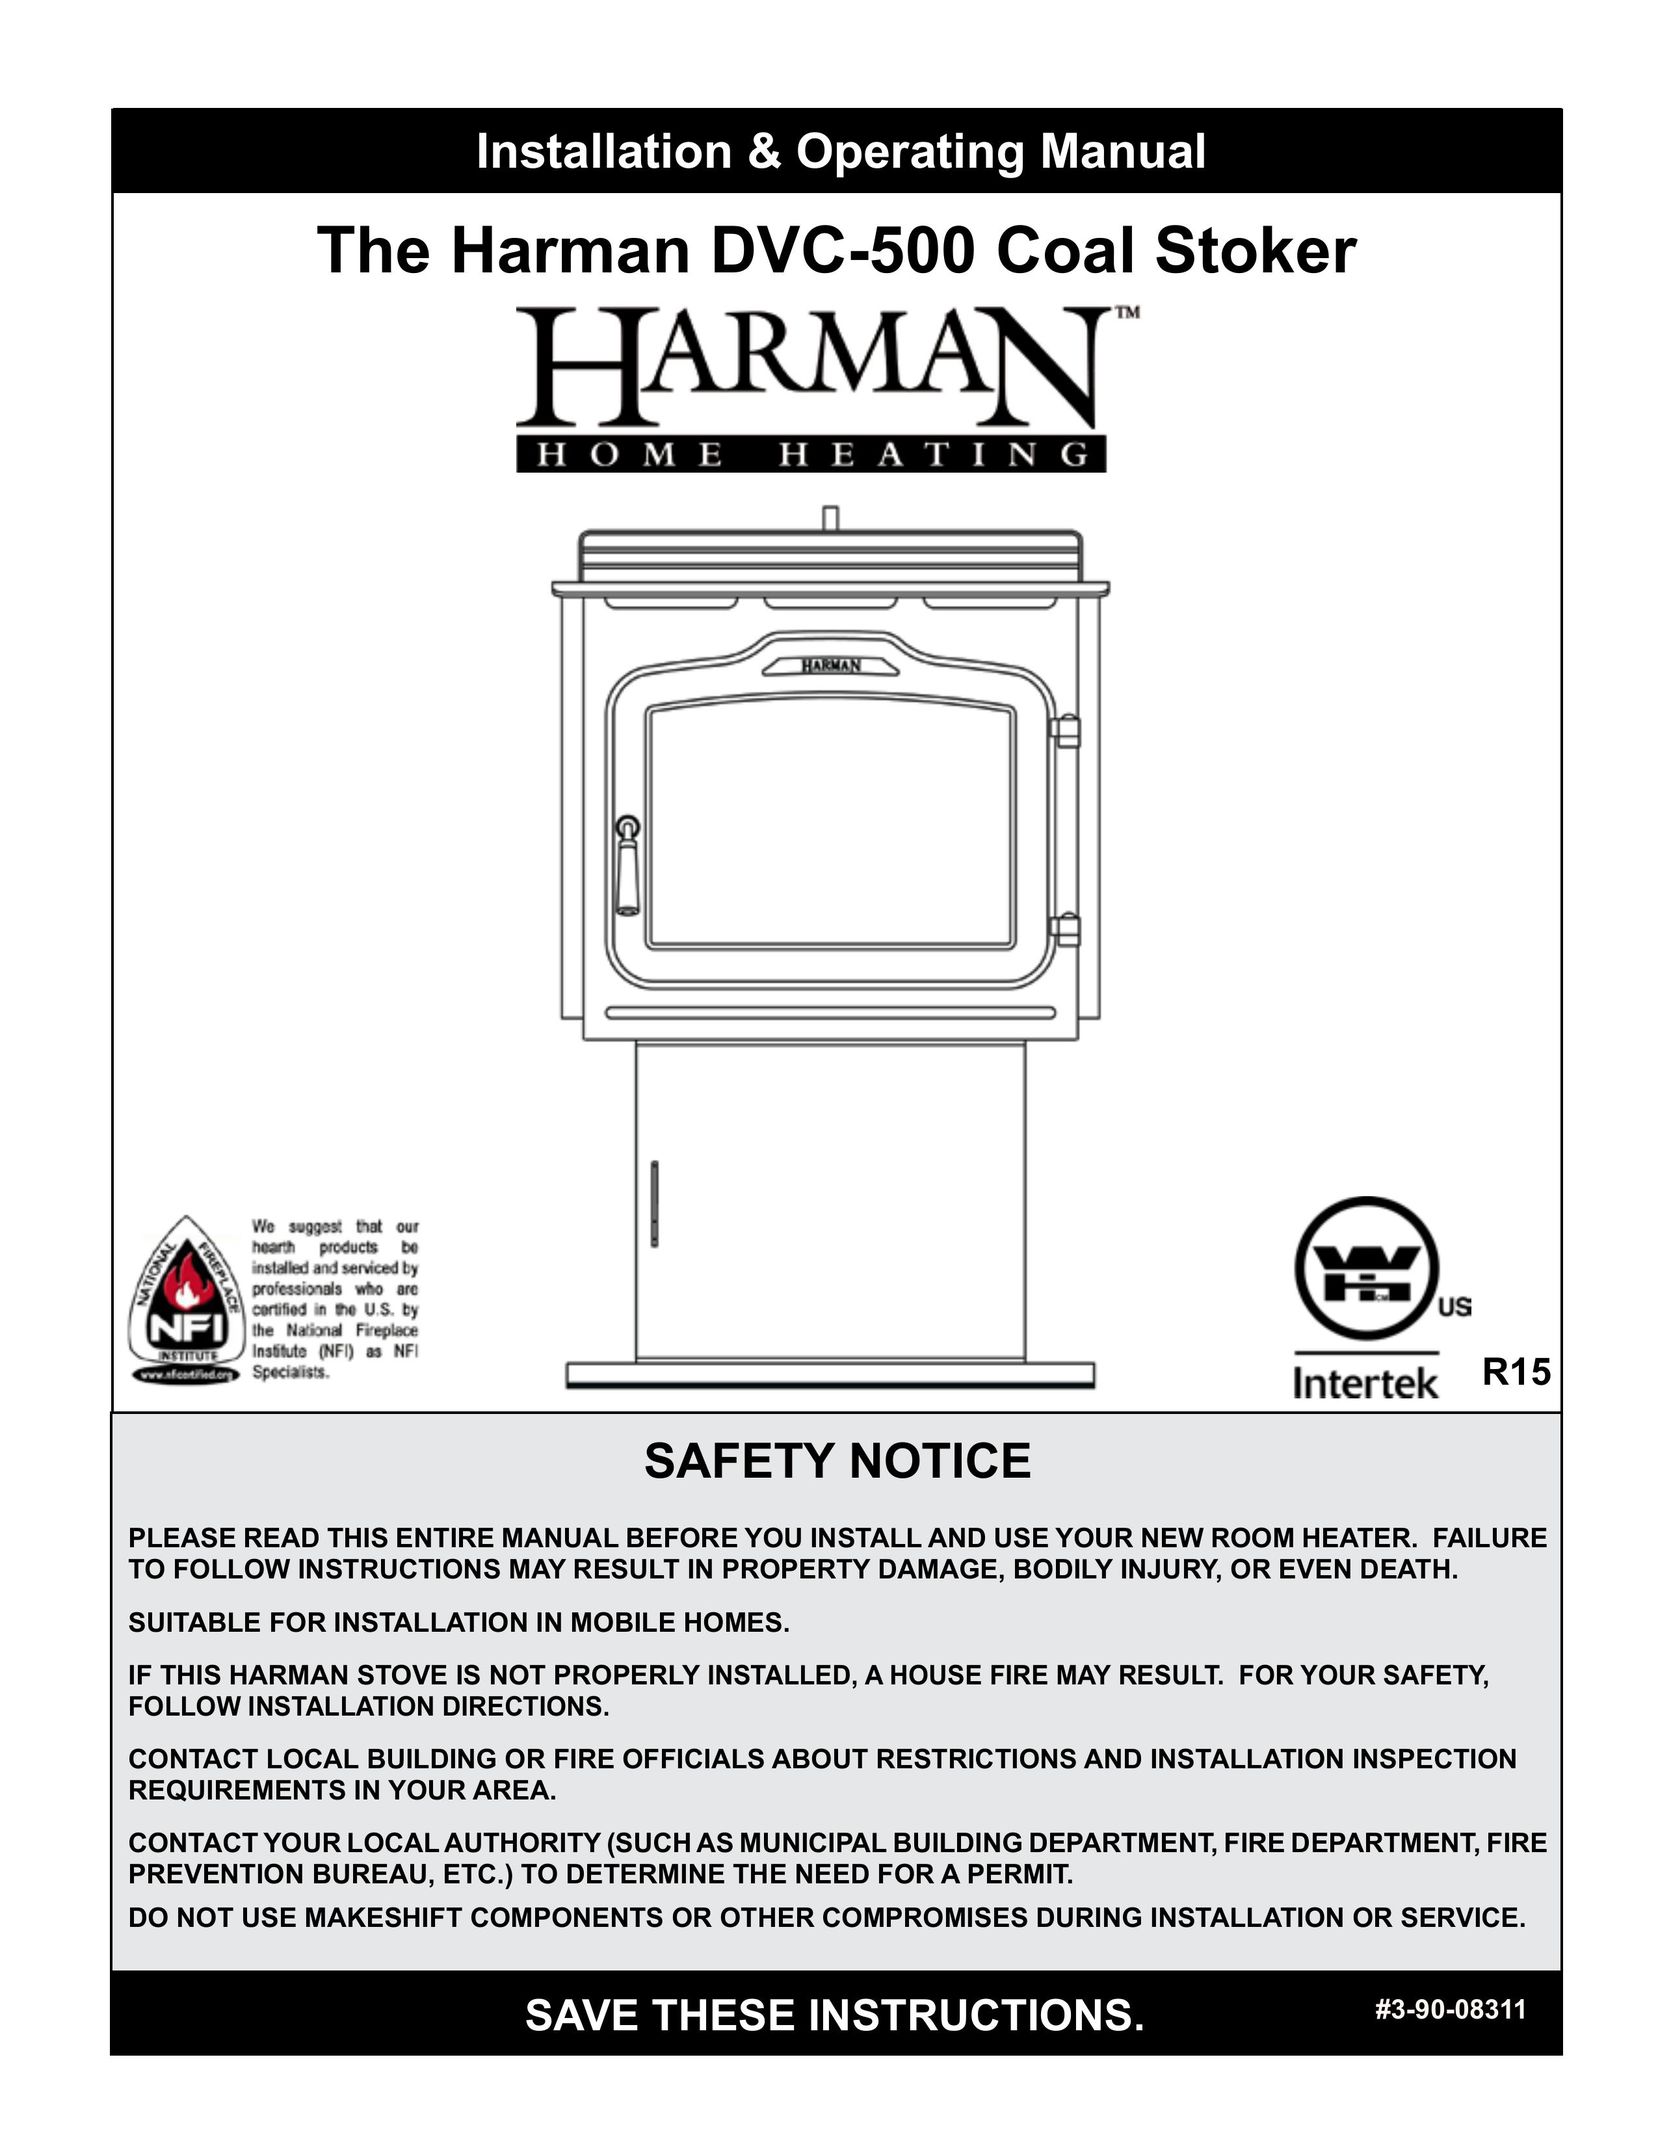 Harman Stove Company DVC-500 Stove User Manual